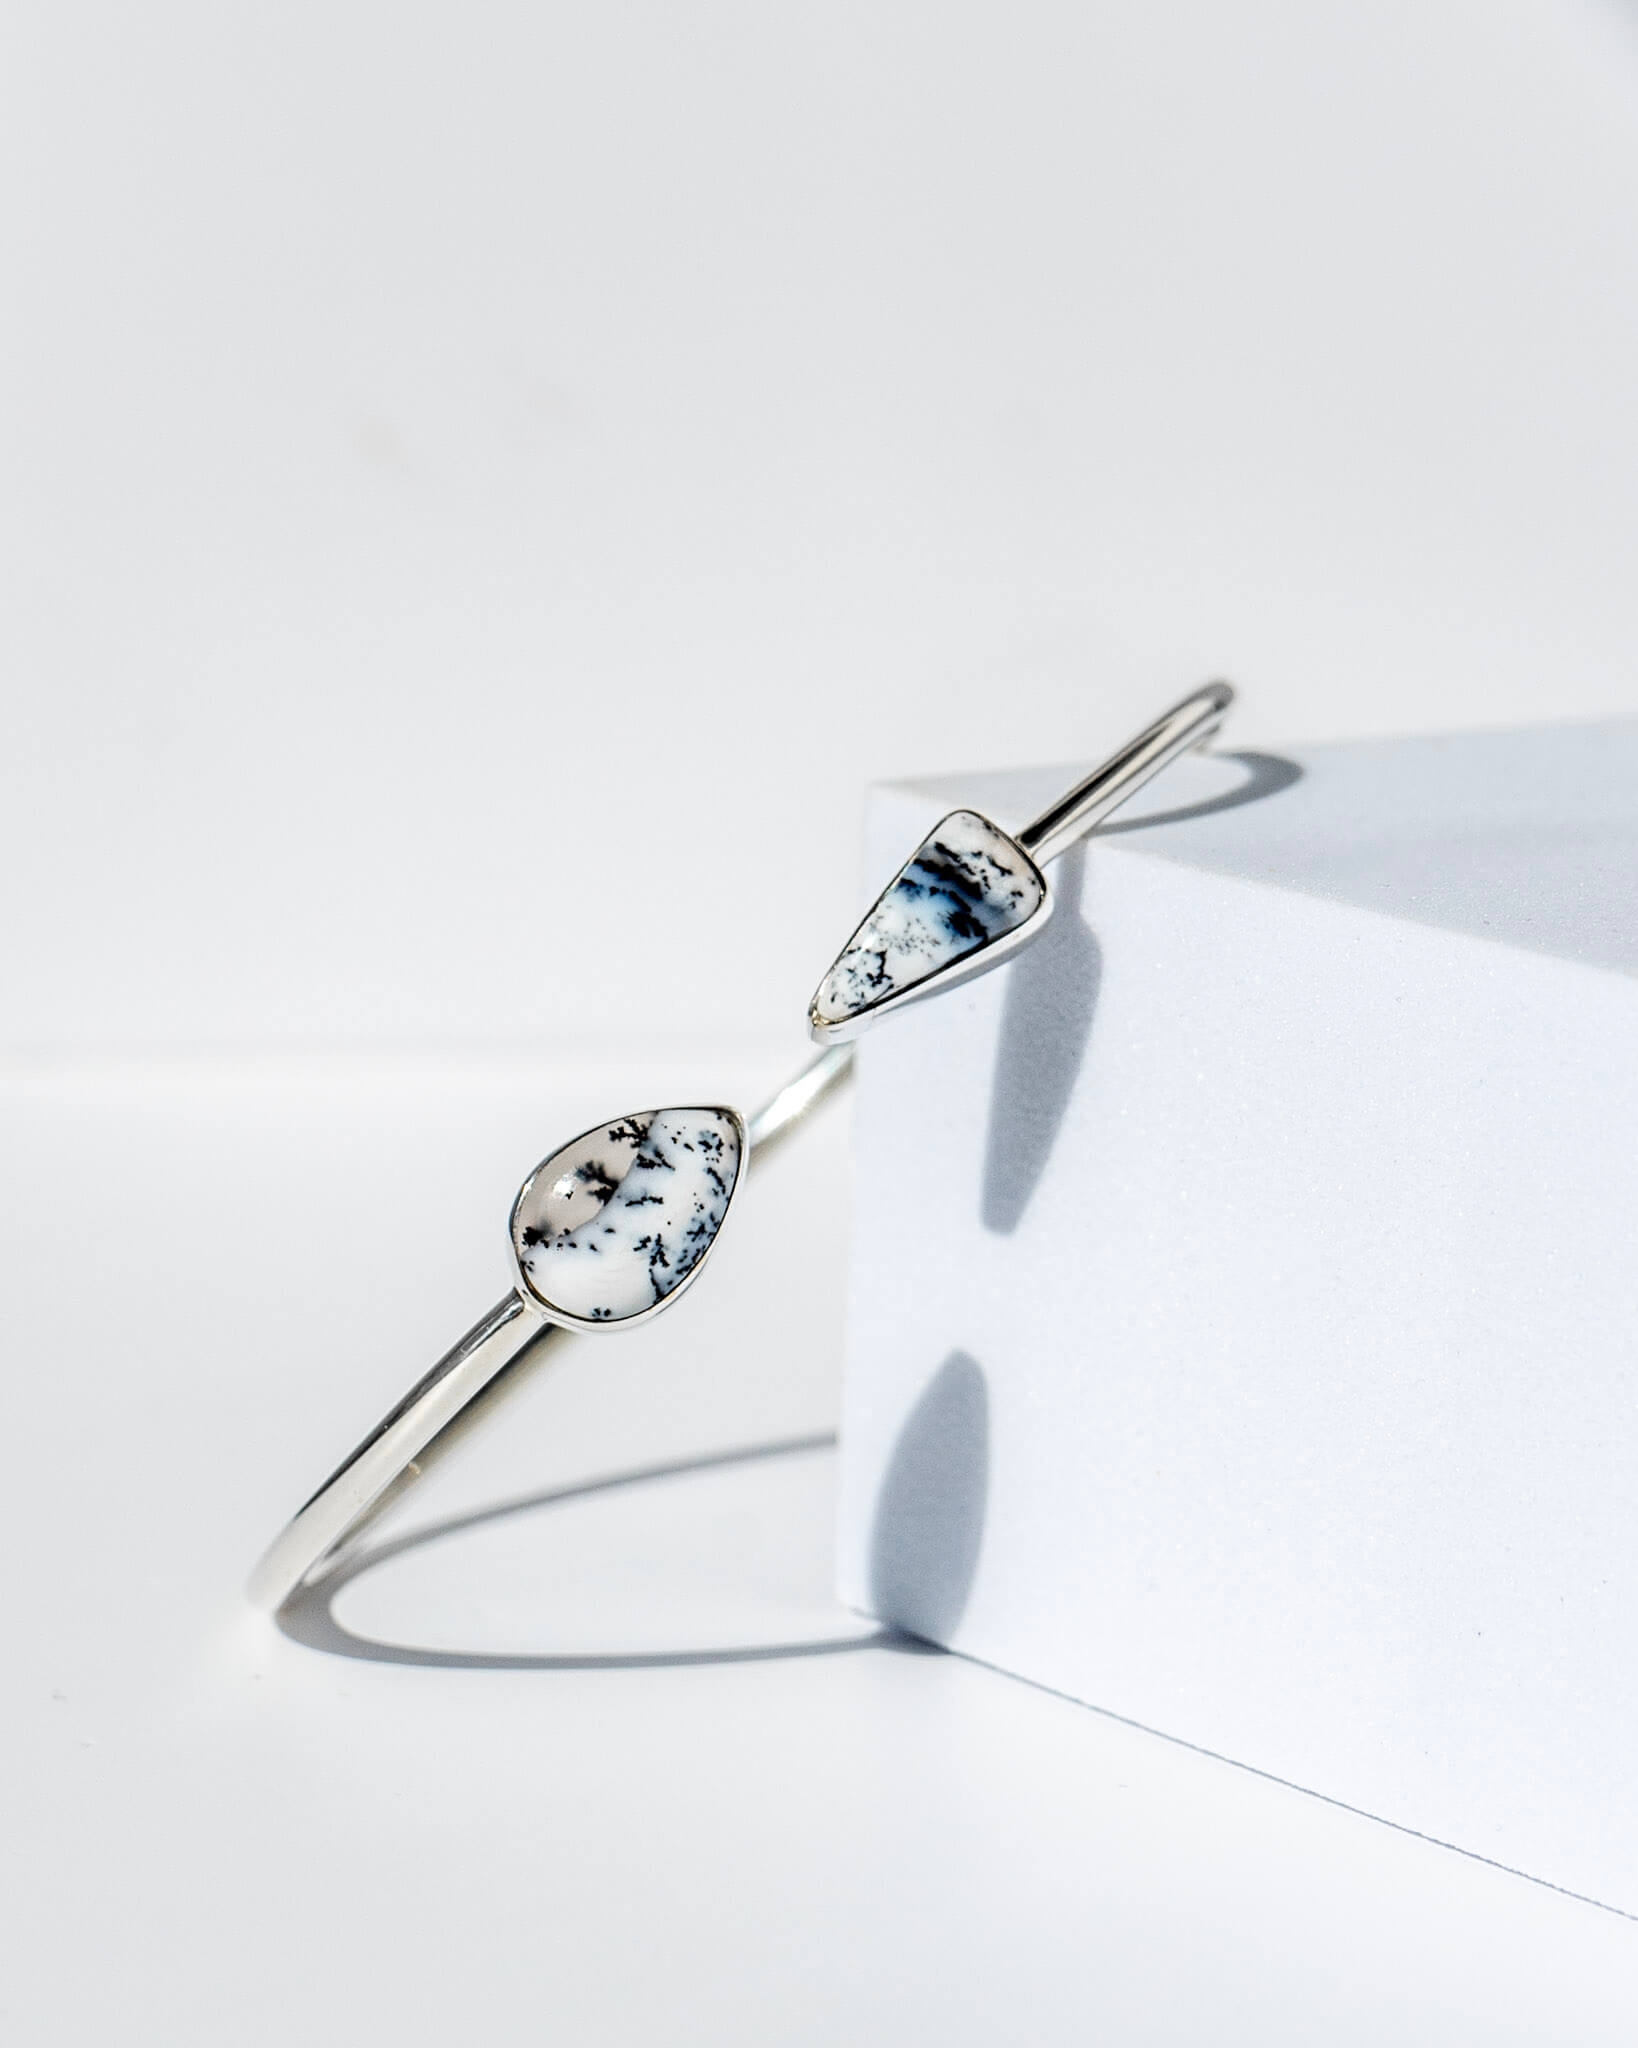 Dendritic Opal Faceted Bangle 925 Sterling Silver Bracelet